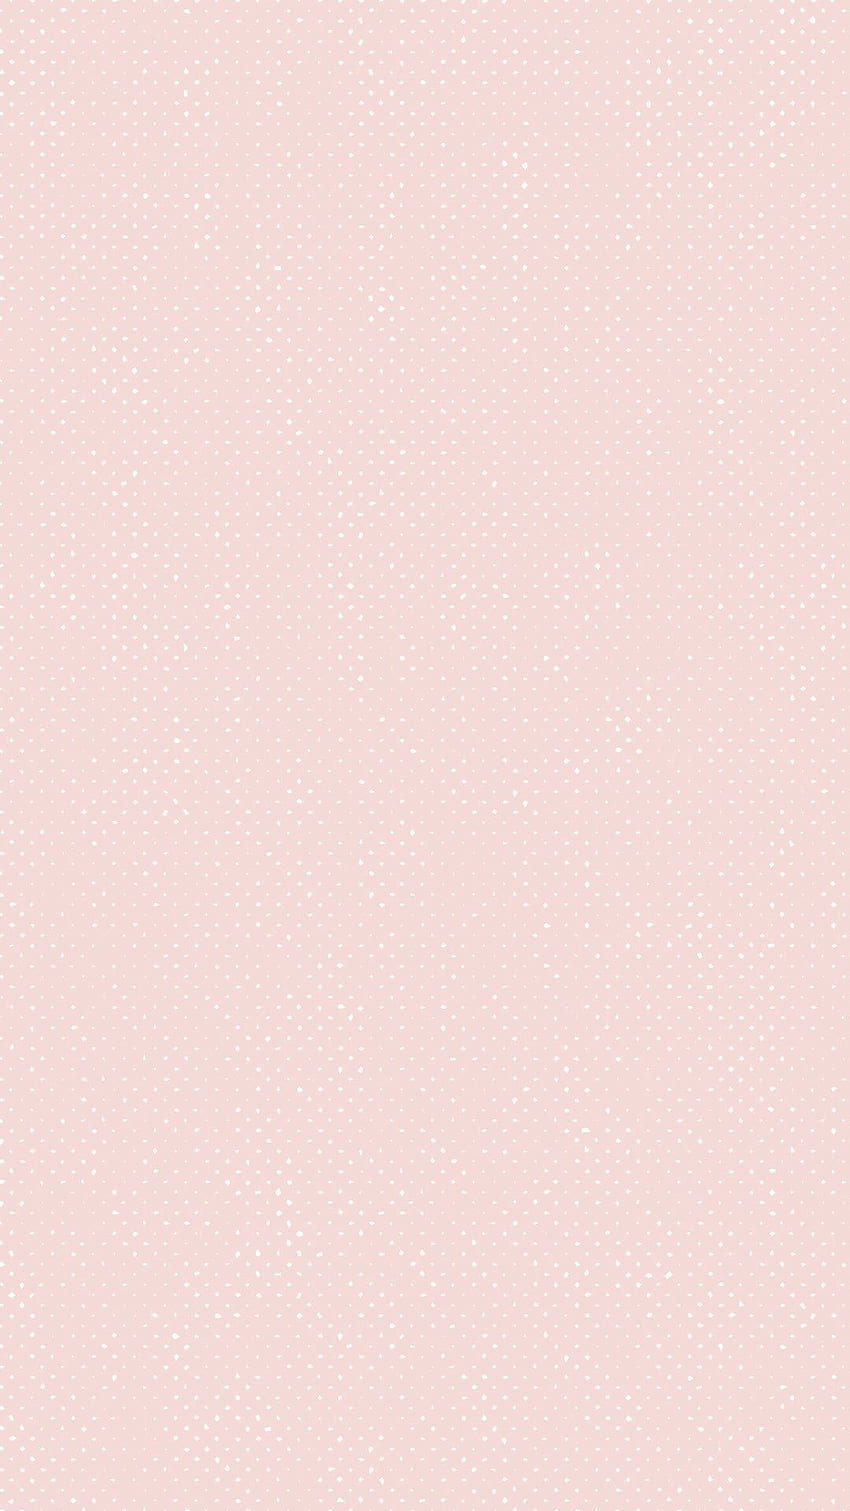 29 Blush backgrounds ideas  iphone wallpaper iphone background phone  wallpaper